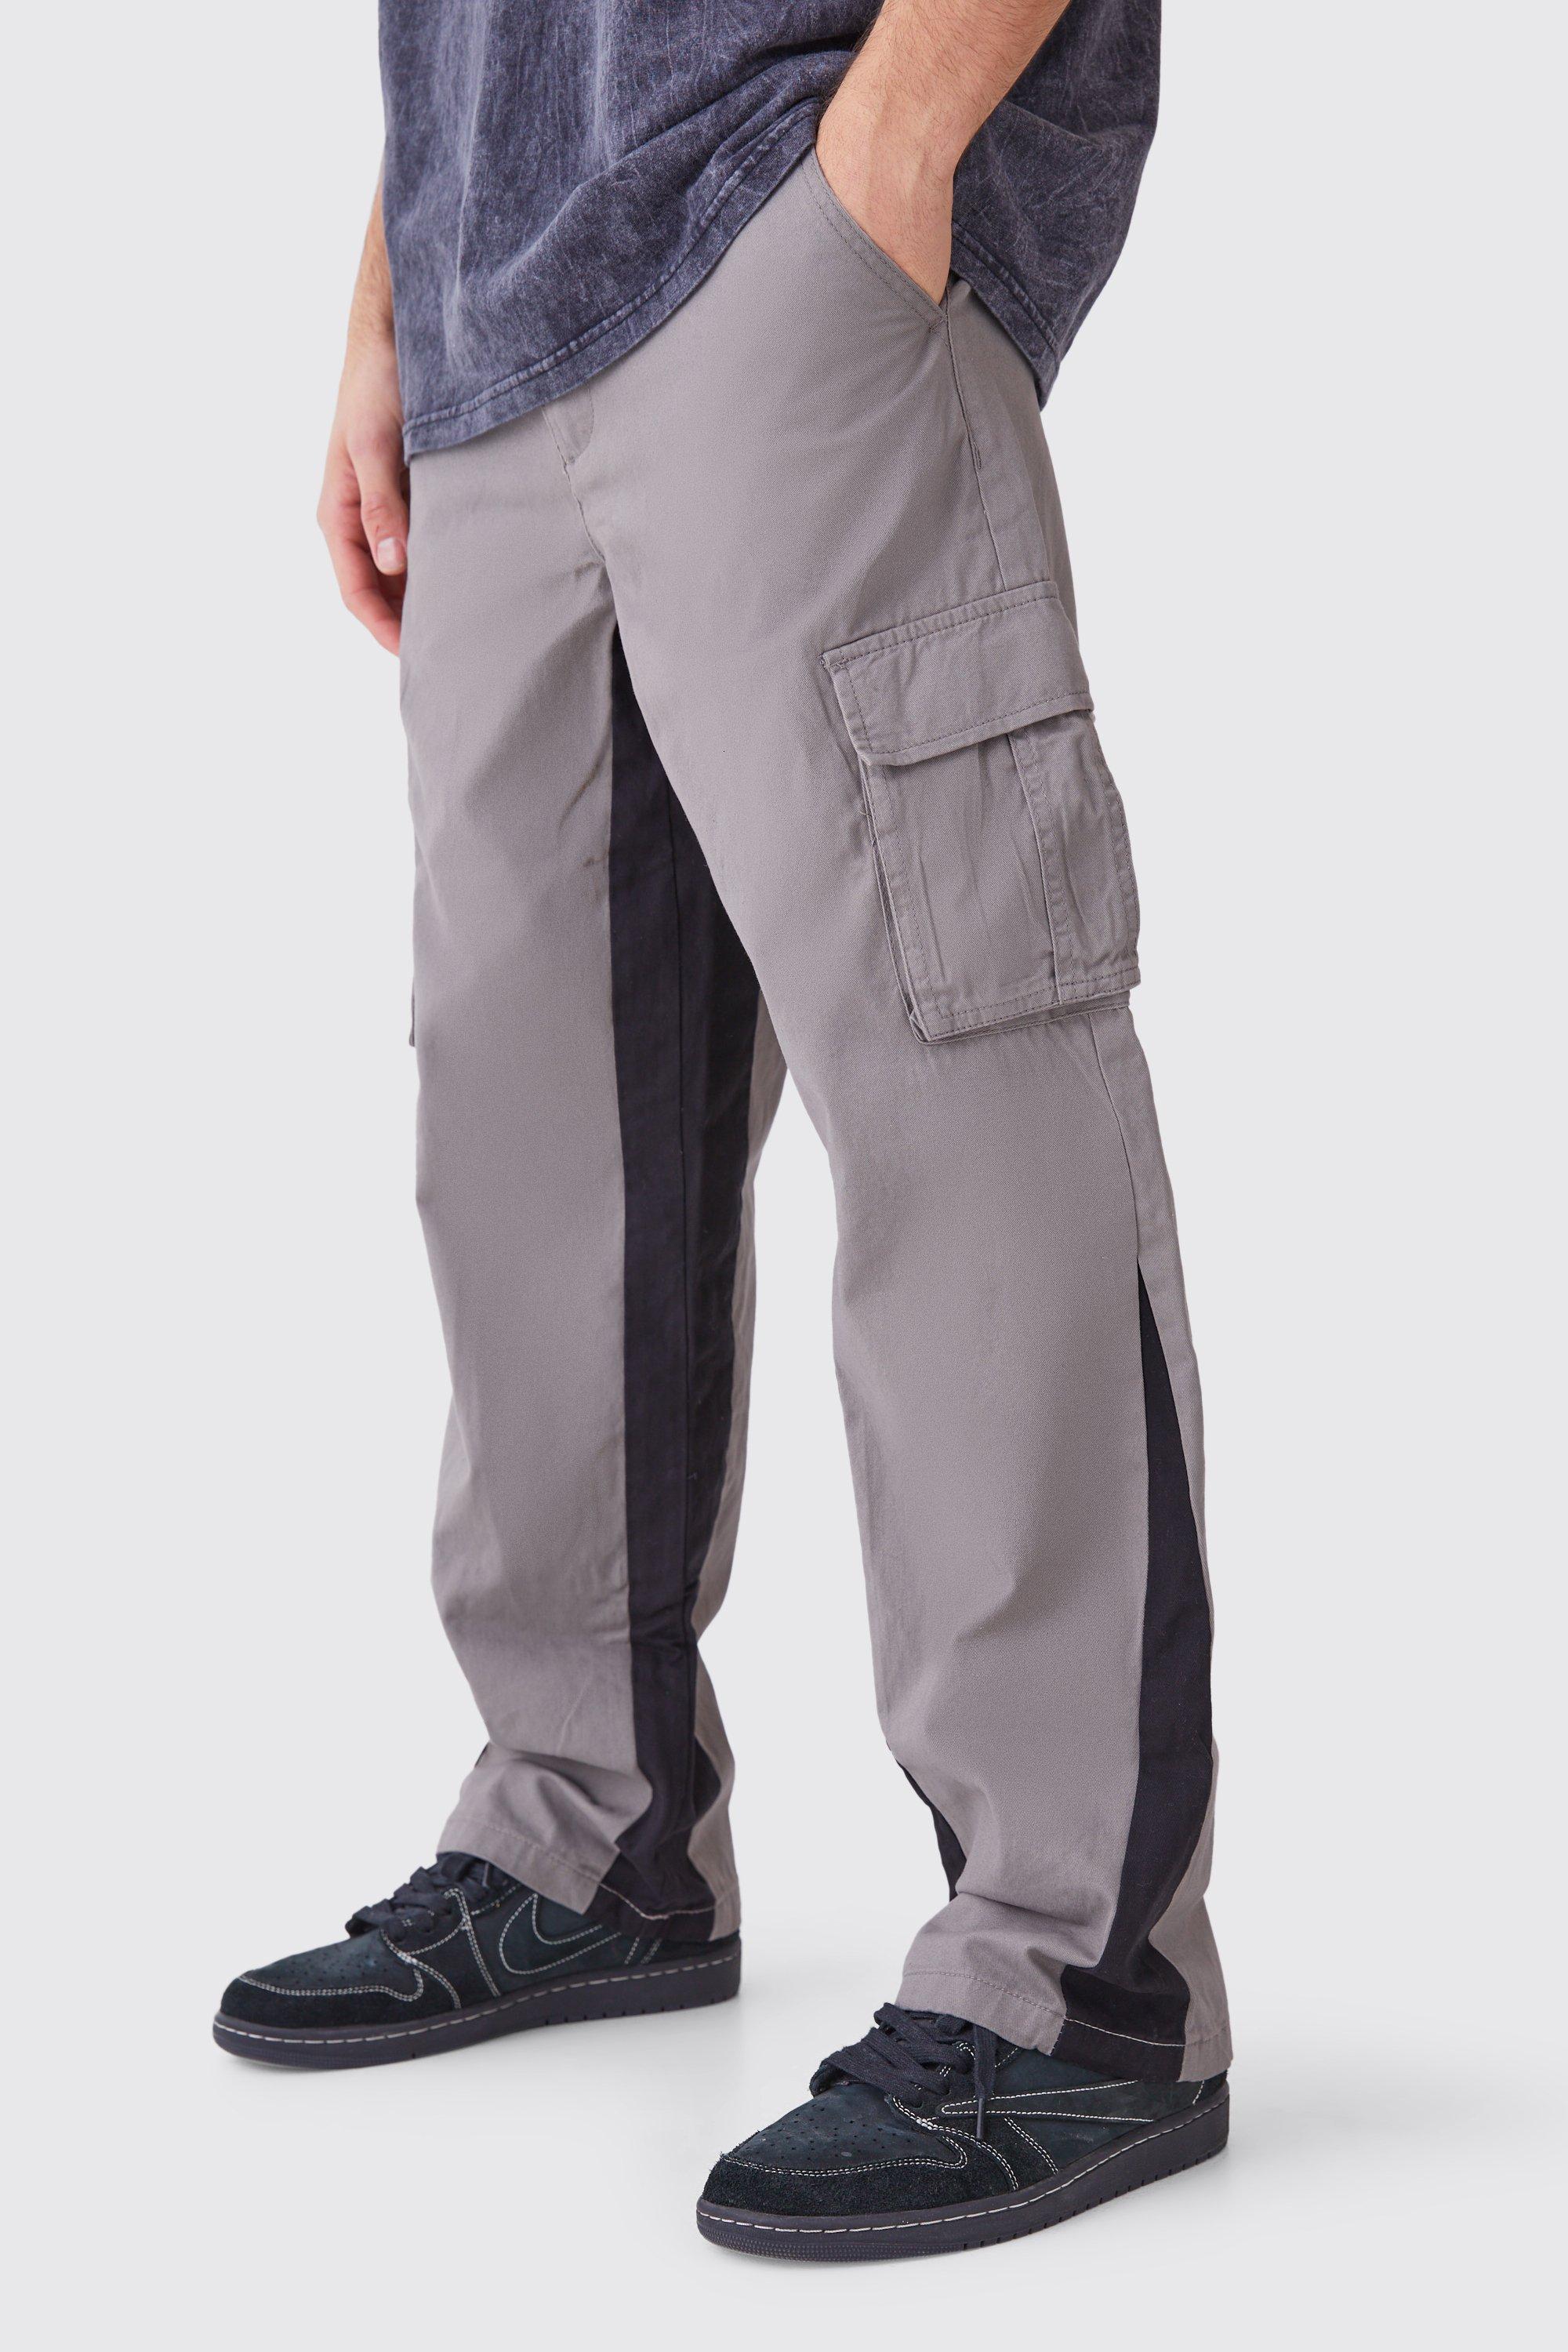 Mens Cargo Trousers, Cargo Pants For Men